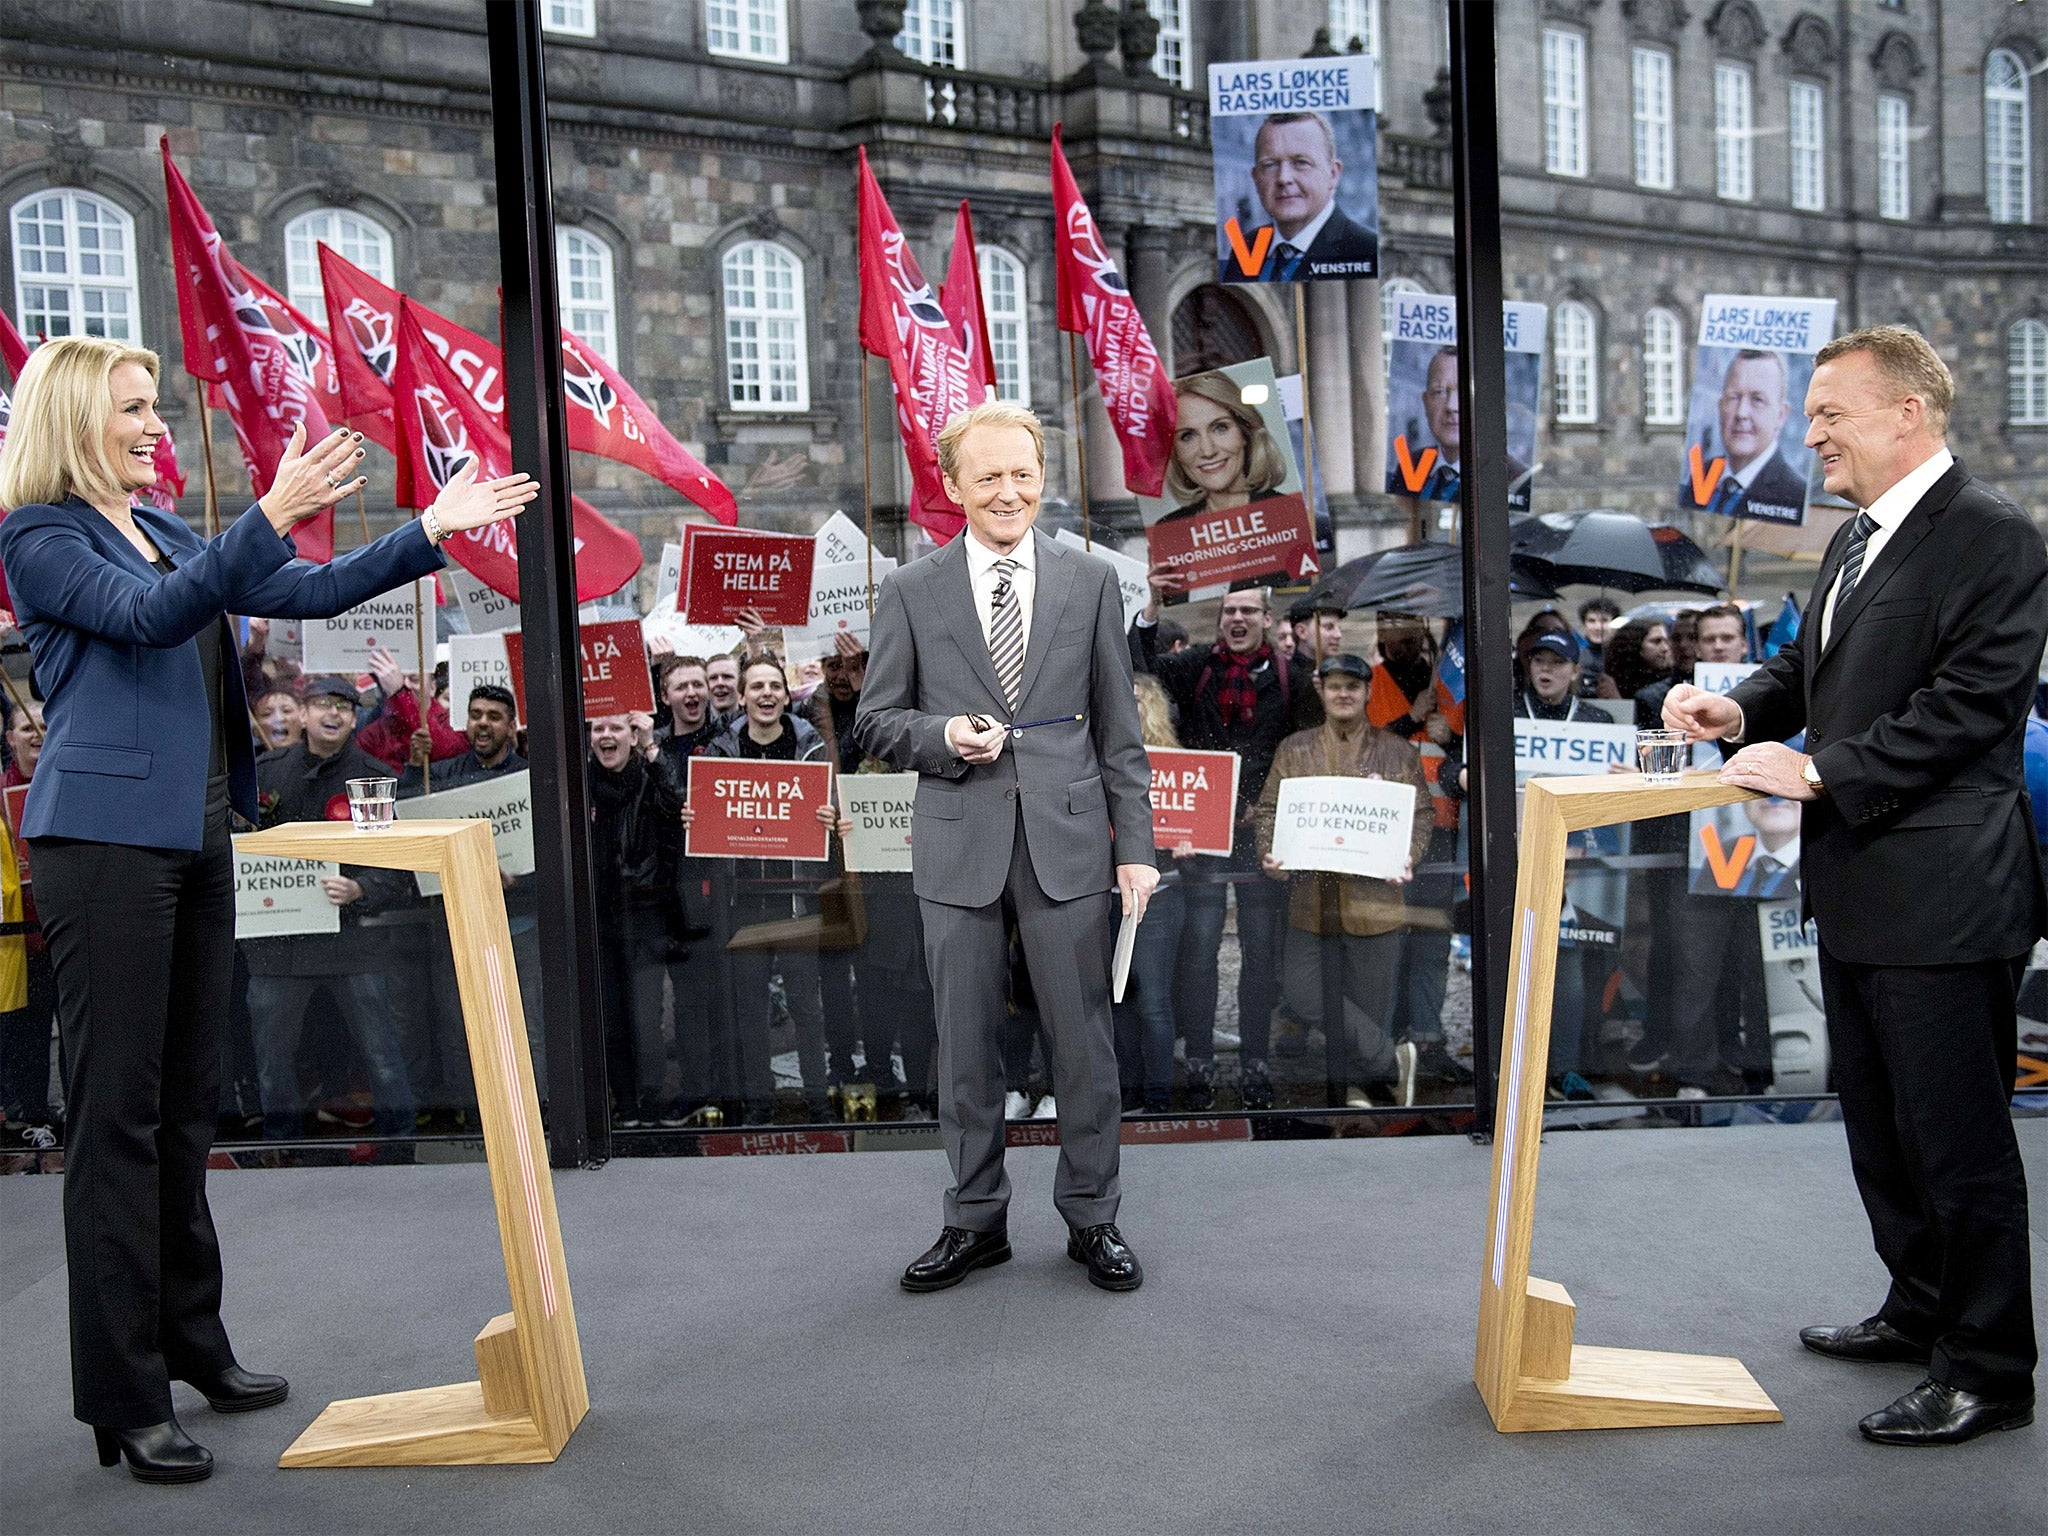 Helle Thorning-Schmidt and Lars Lokke Rasmussen at an election campaign debate in Copenhagen